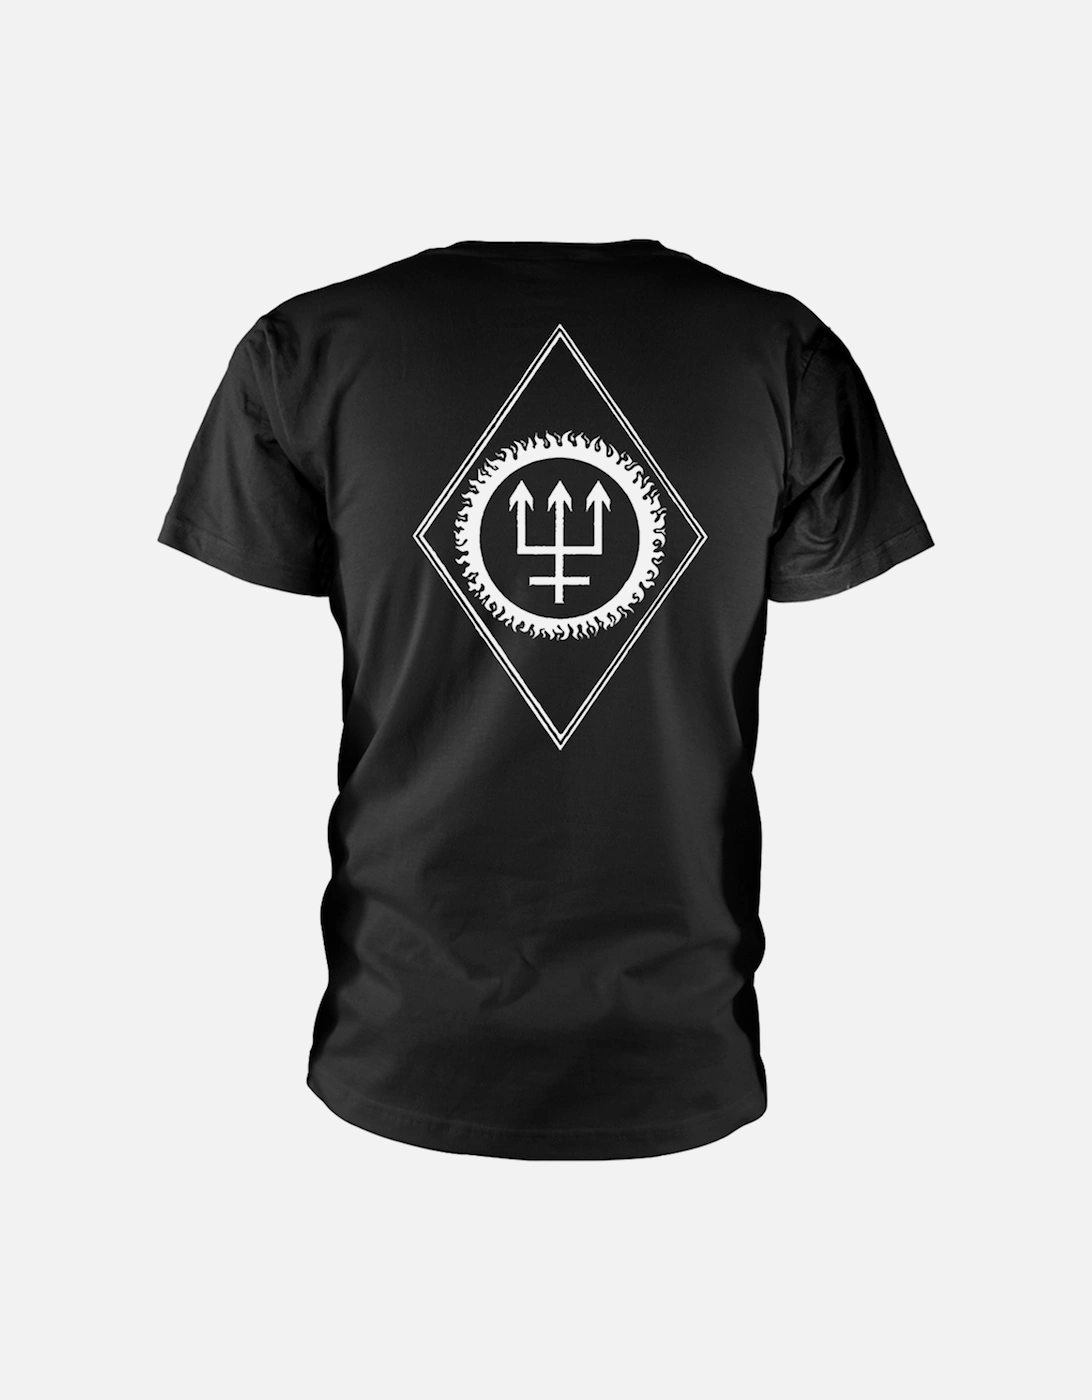 Unisex Adult Black Metal Militia T-Shirt